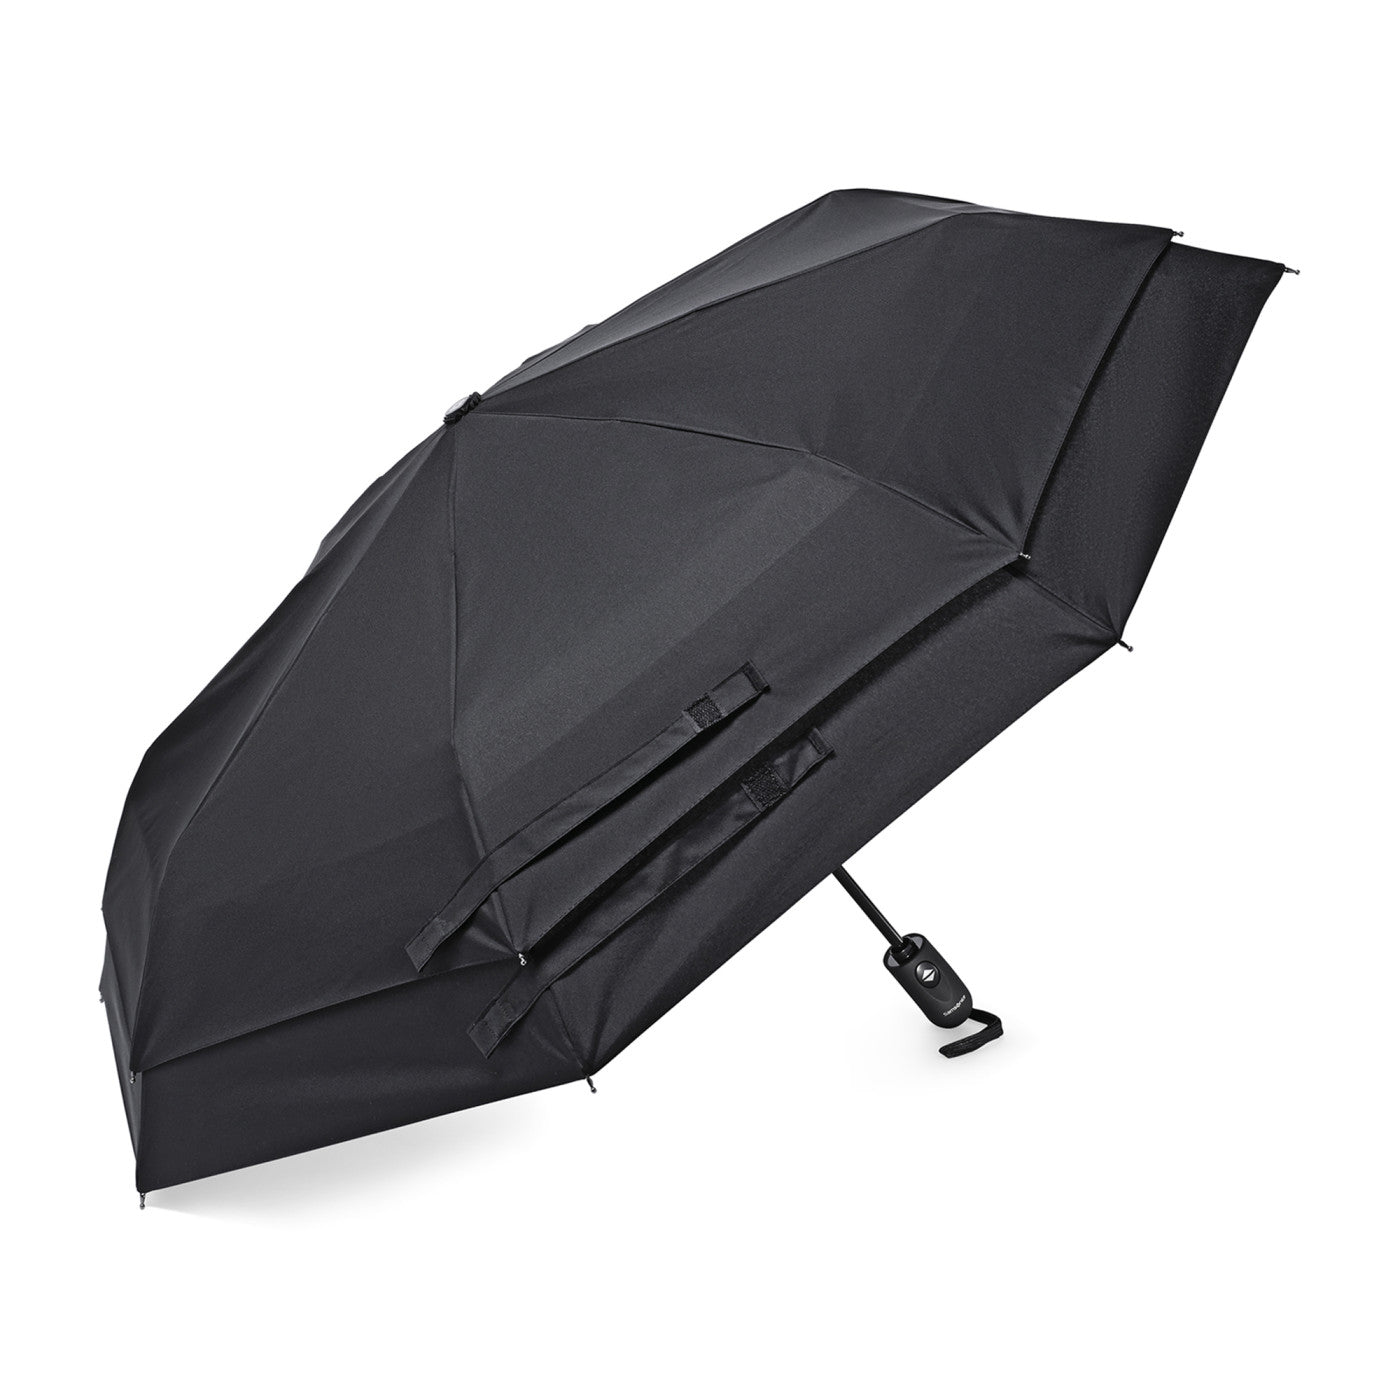 Samsonite - Windguard Auto Open/Close Umbrella